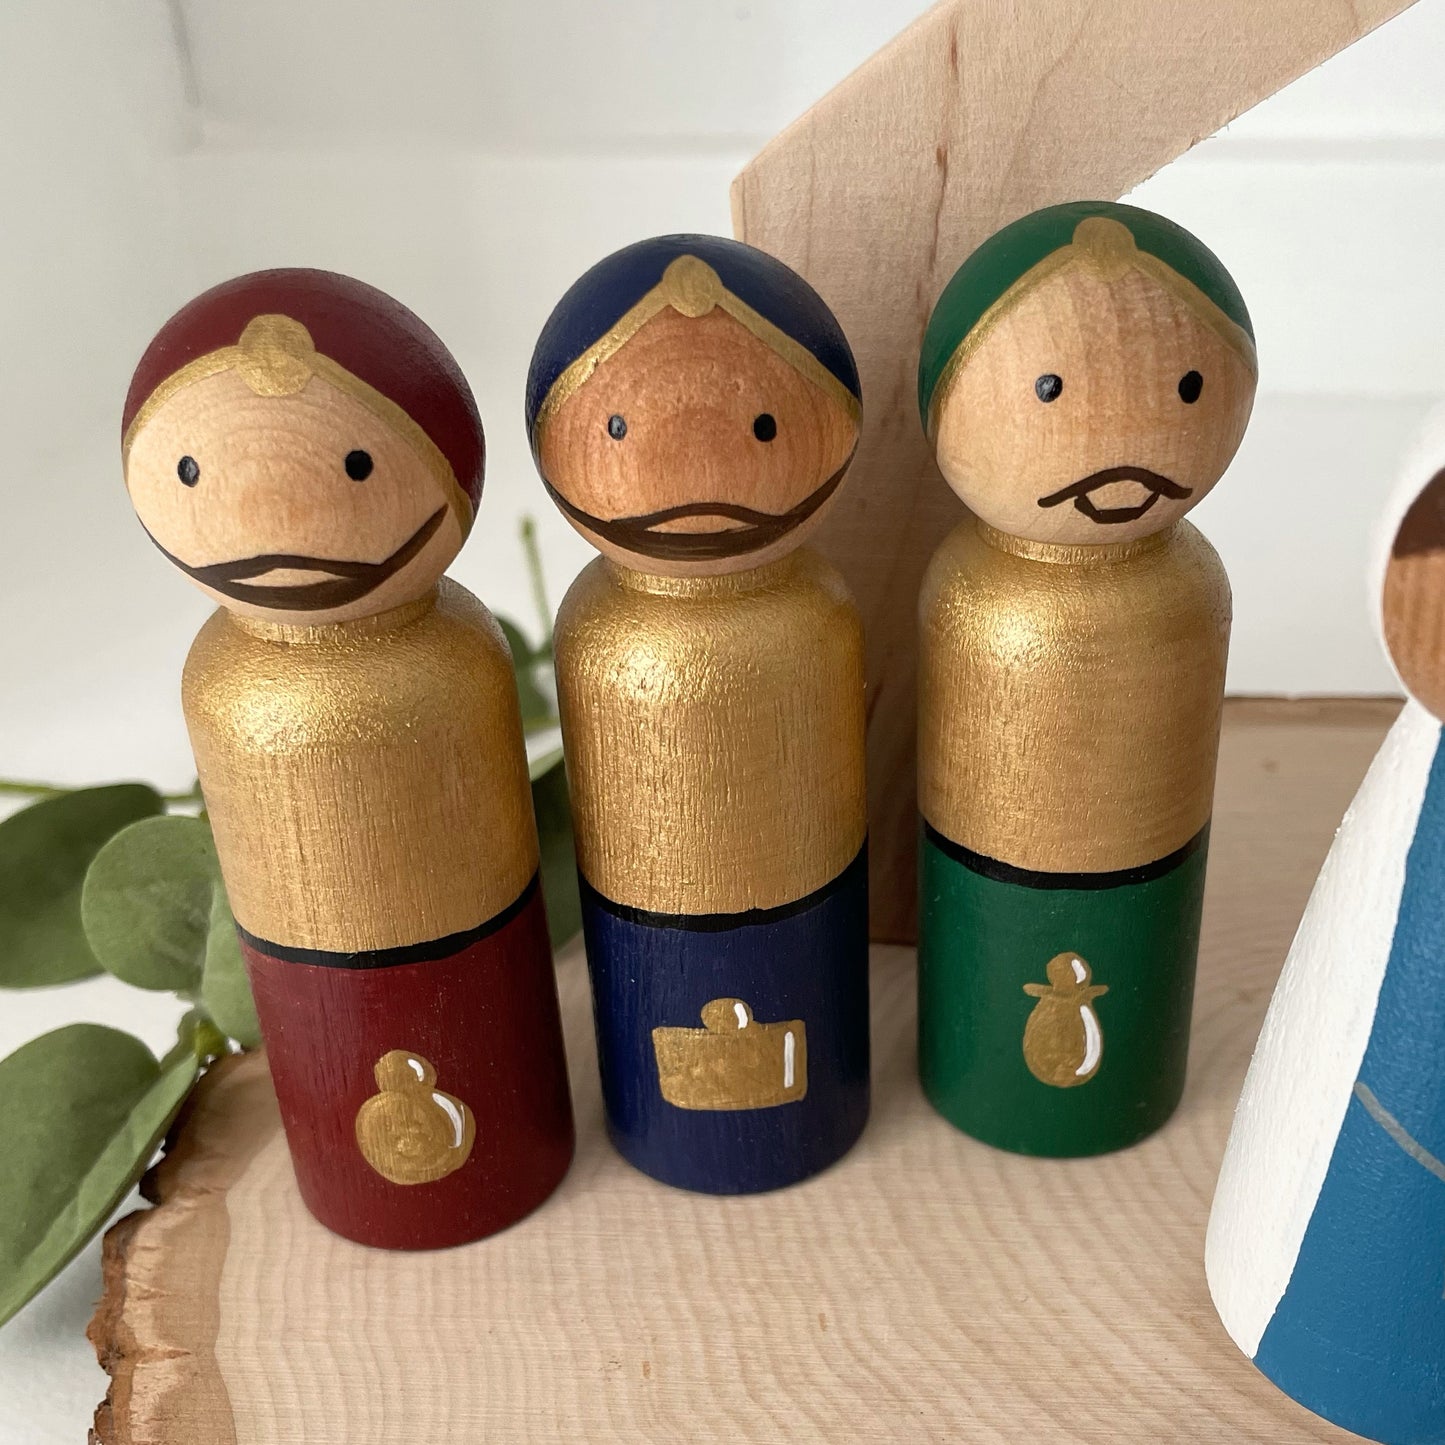 Wooden peg doll Nativity Scene